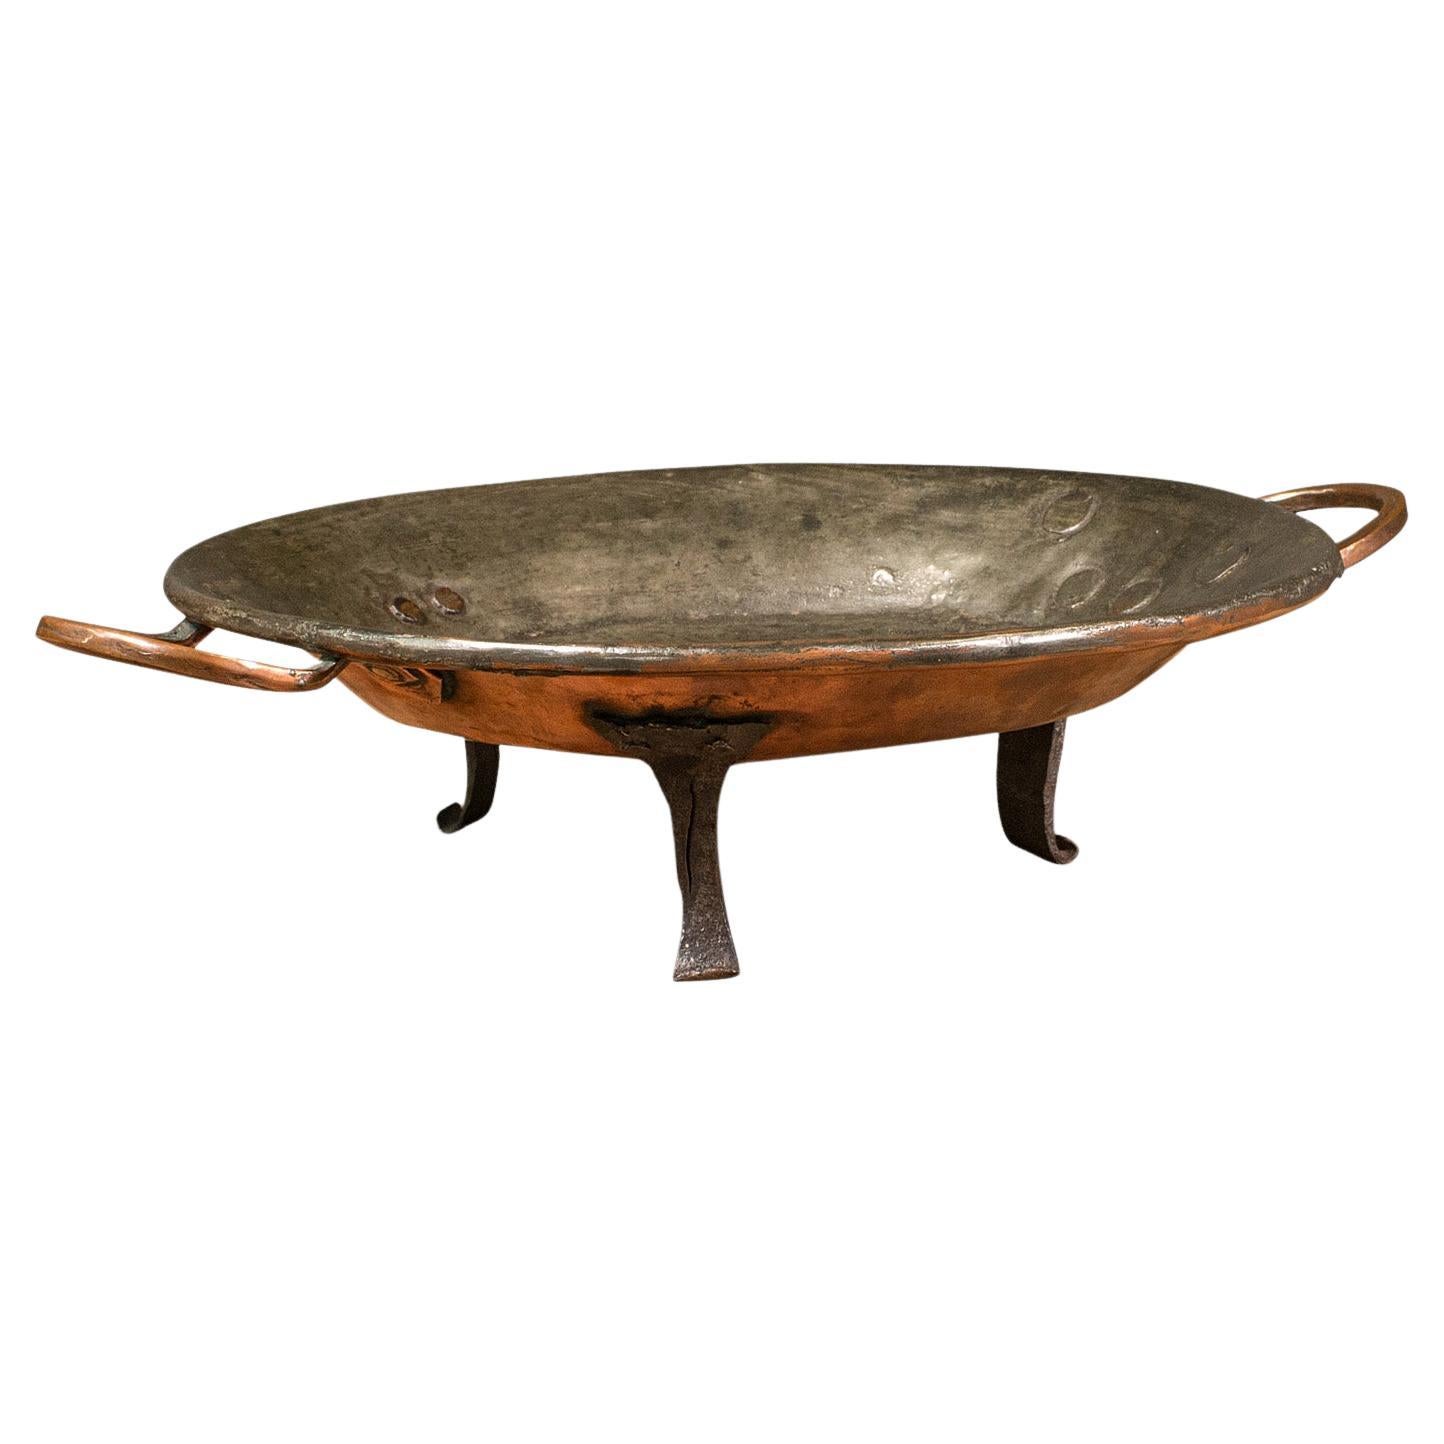 Antique Cooking Dish, English, Copper, Decorative Tray, Historic, Georgian, 1750